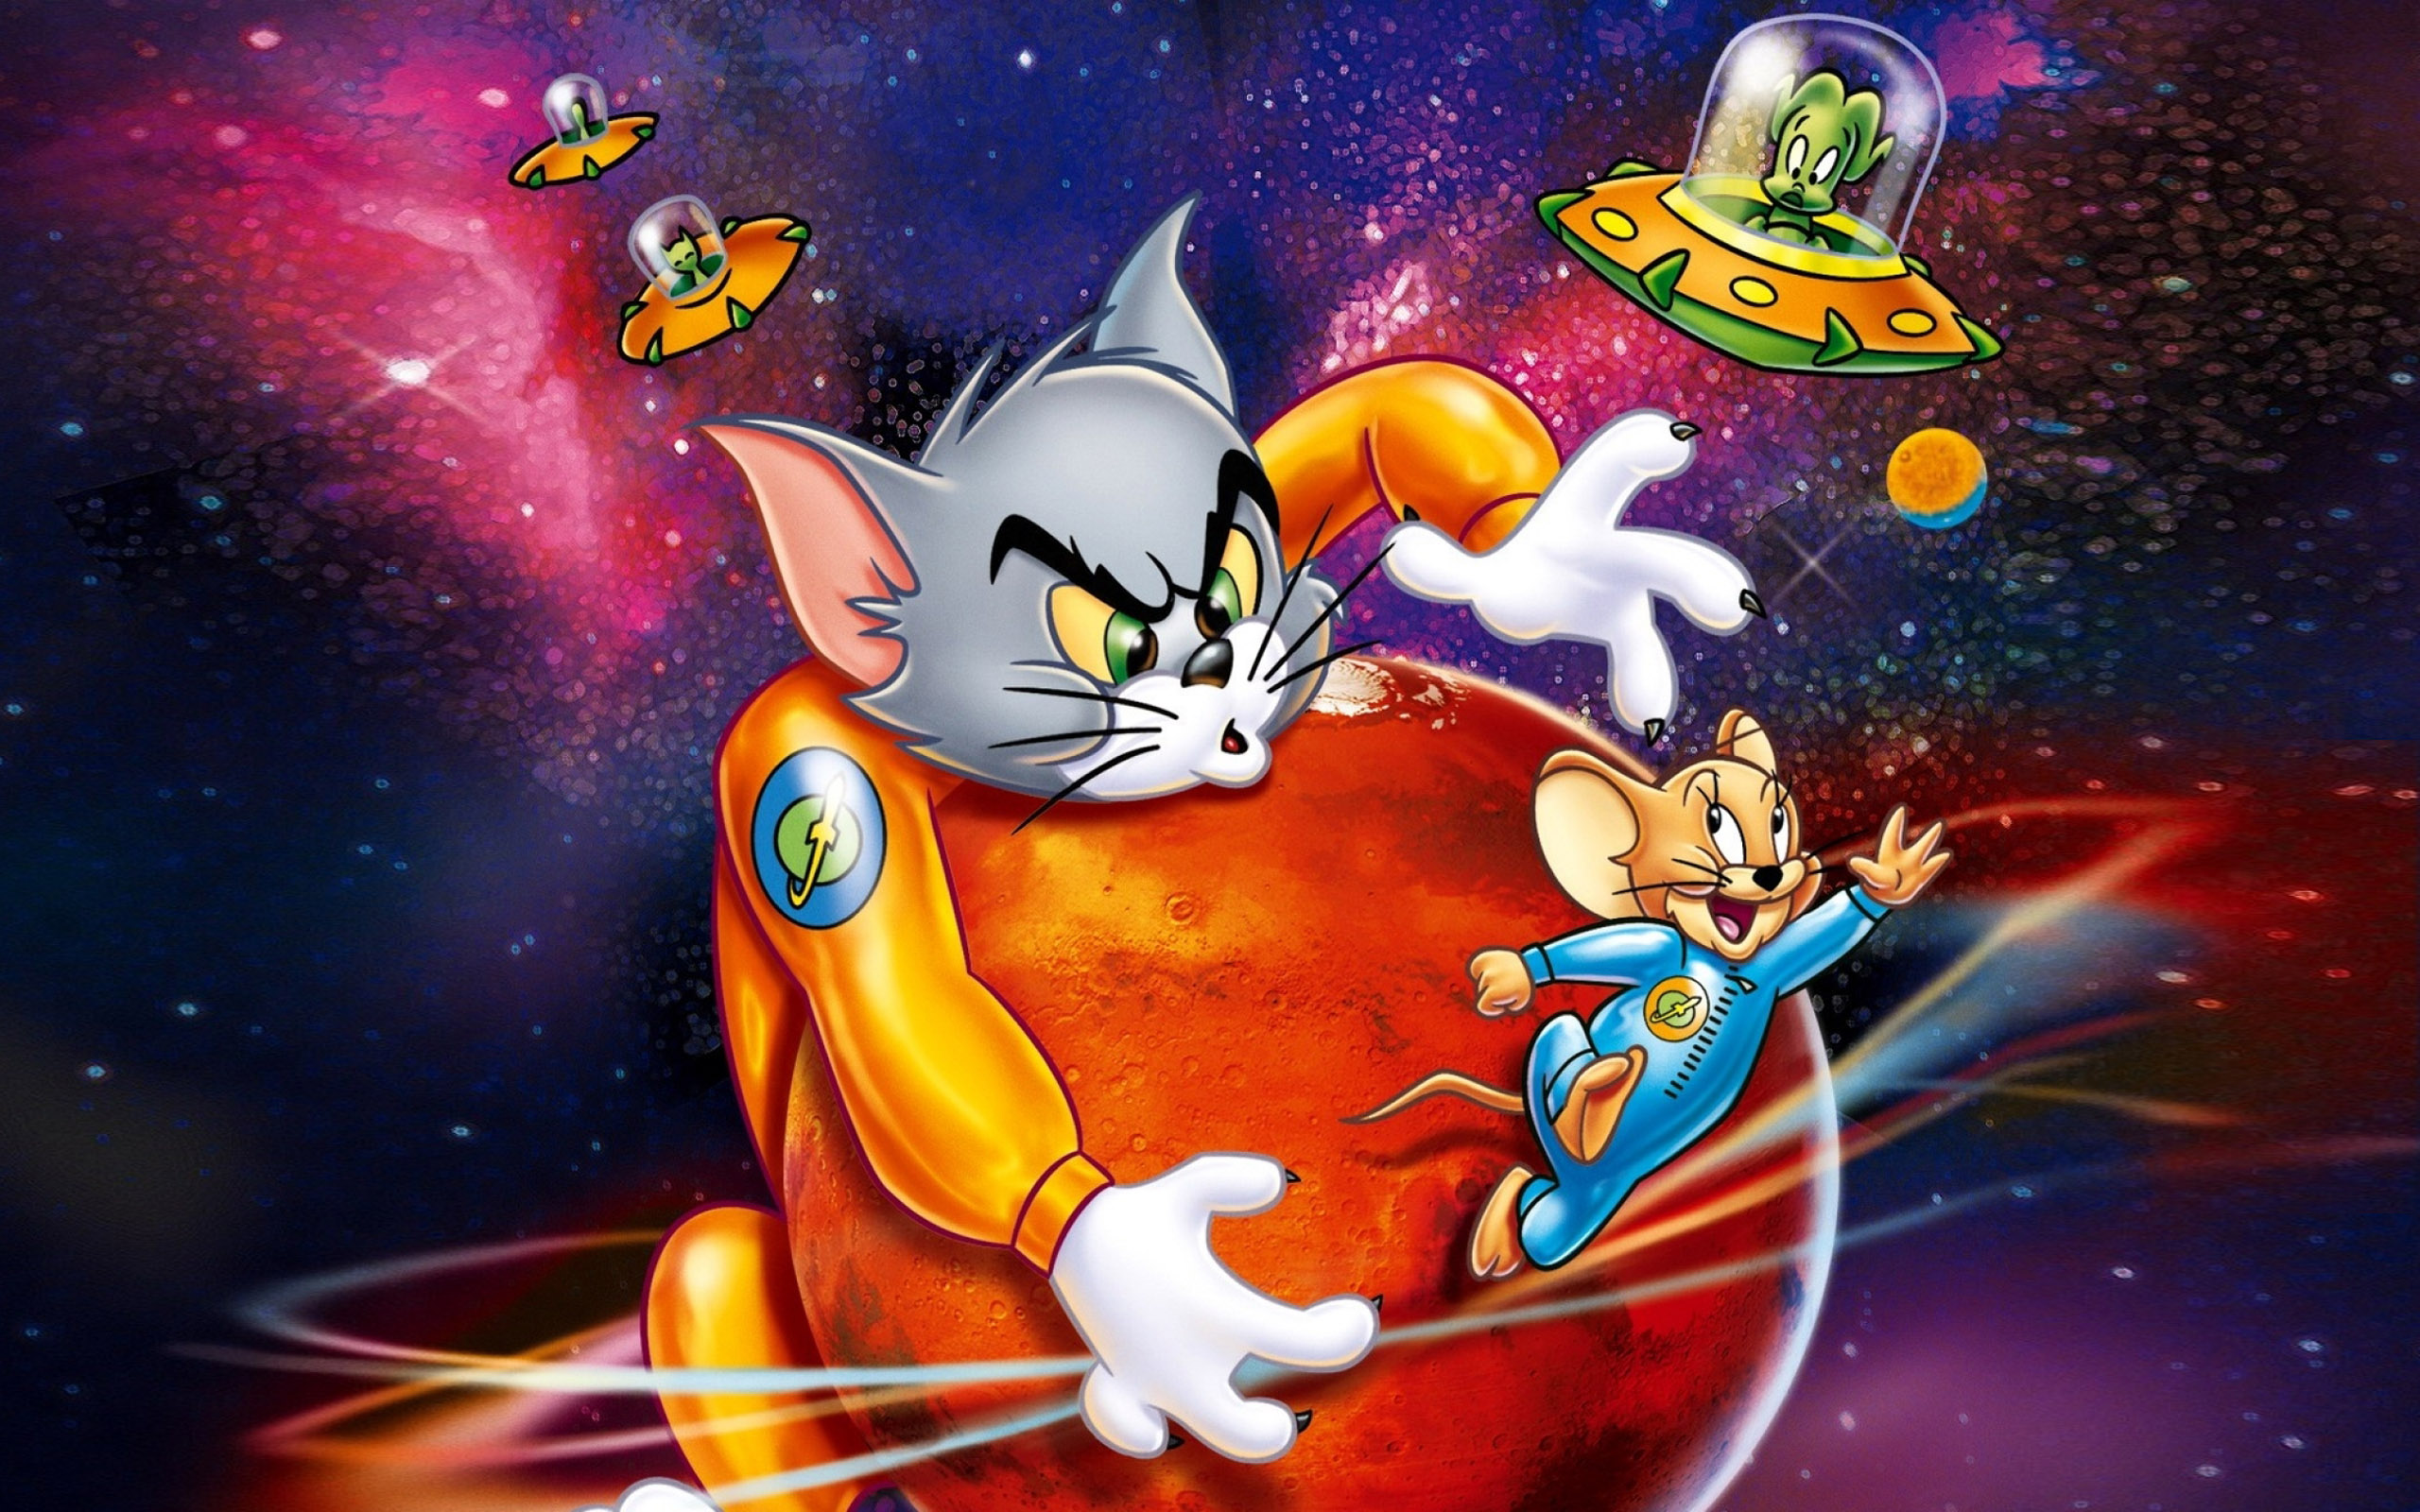 Tom and jerry 55. Tom and Jerry. Том и Джерри полет на Марс 2005. Tommy jeryh.